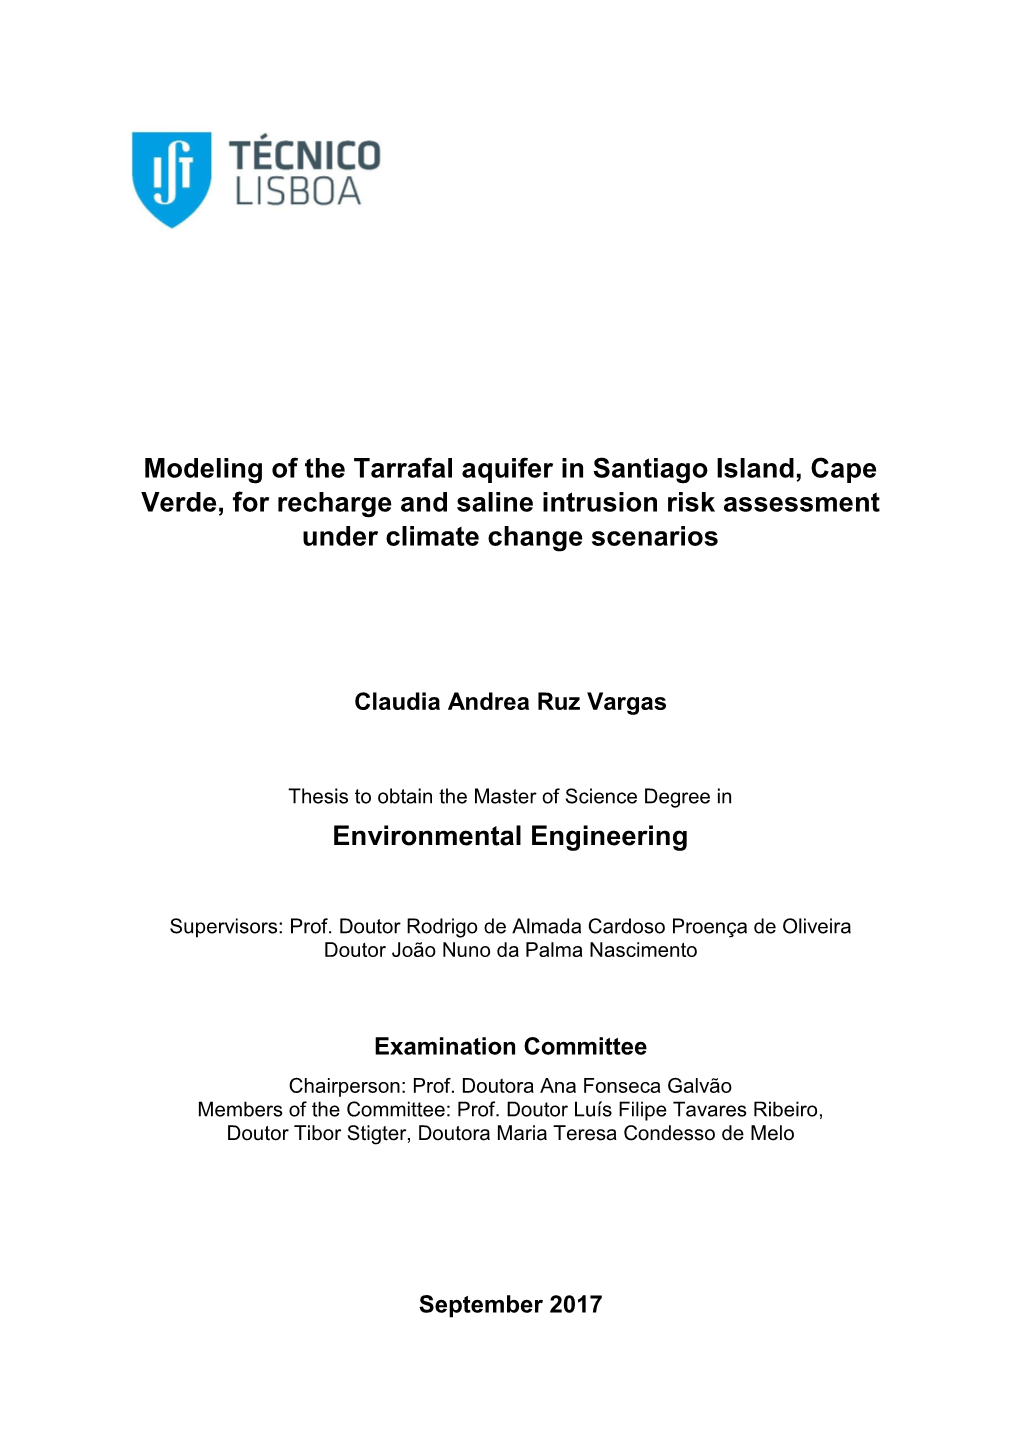 Modeling of the Tarrafal Aquifer in Santiago Island, Cape Verde, for Recharge and Saline Intrusion Risk Assessment Under Climate Change Scenarios